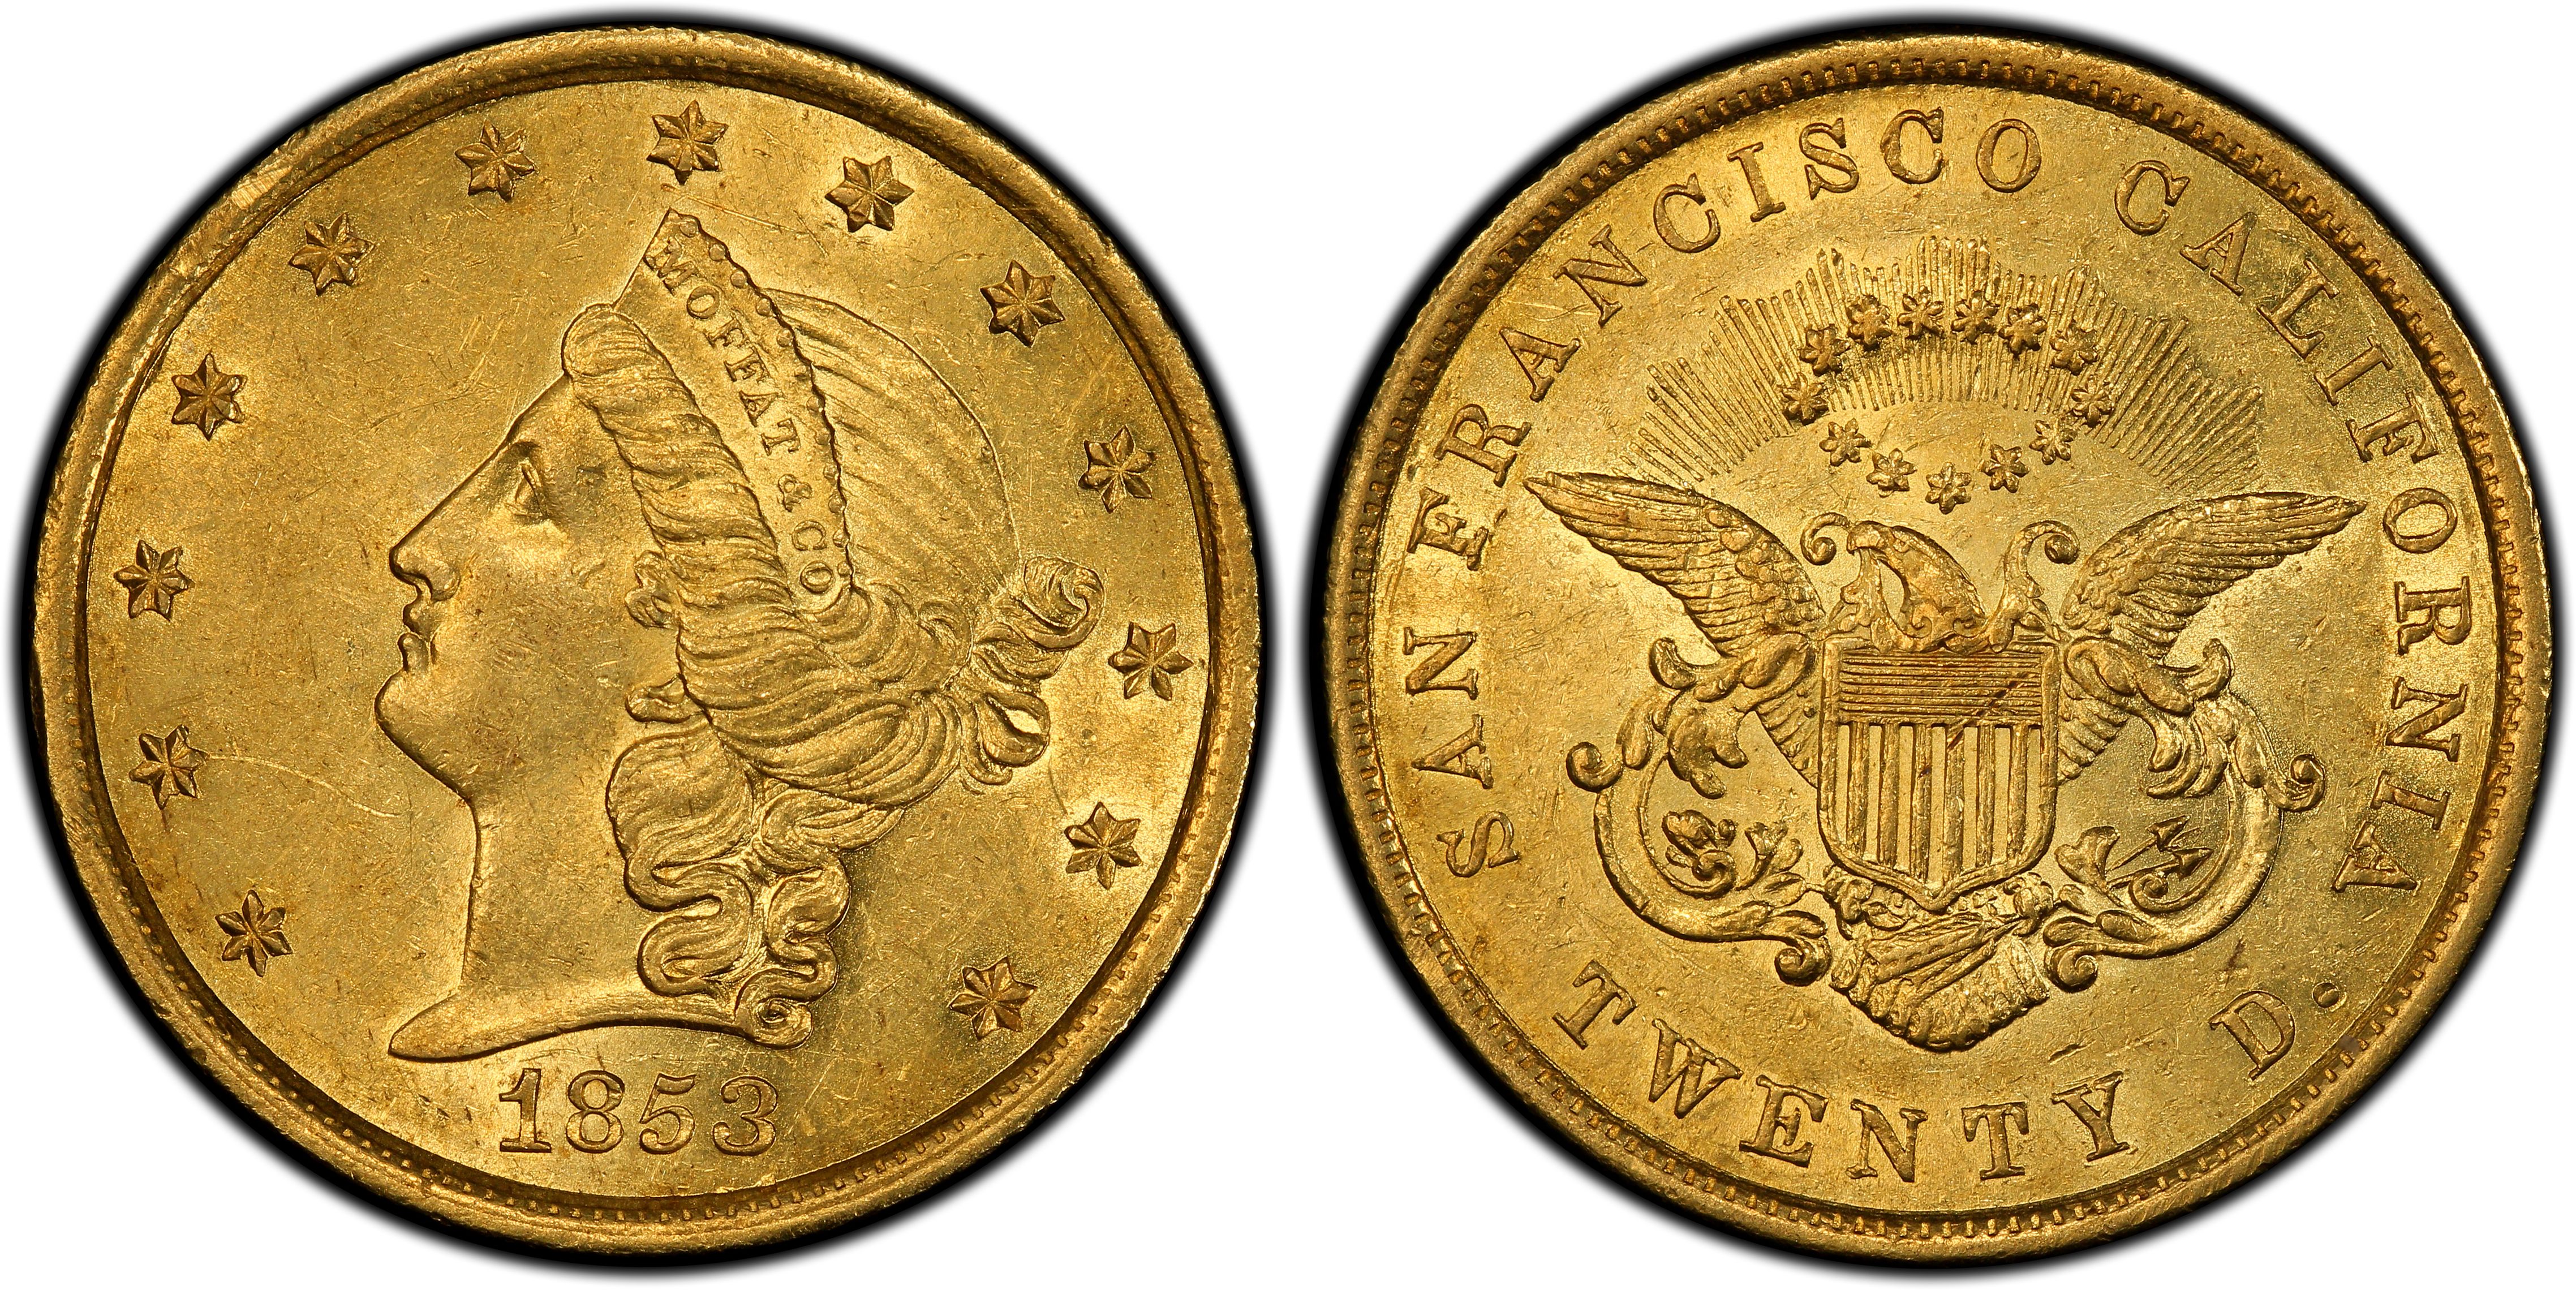 1853 $20 Moffat & Co. (Regular Strike) California Gold - PCGS CoinFacts